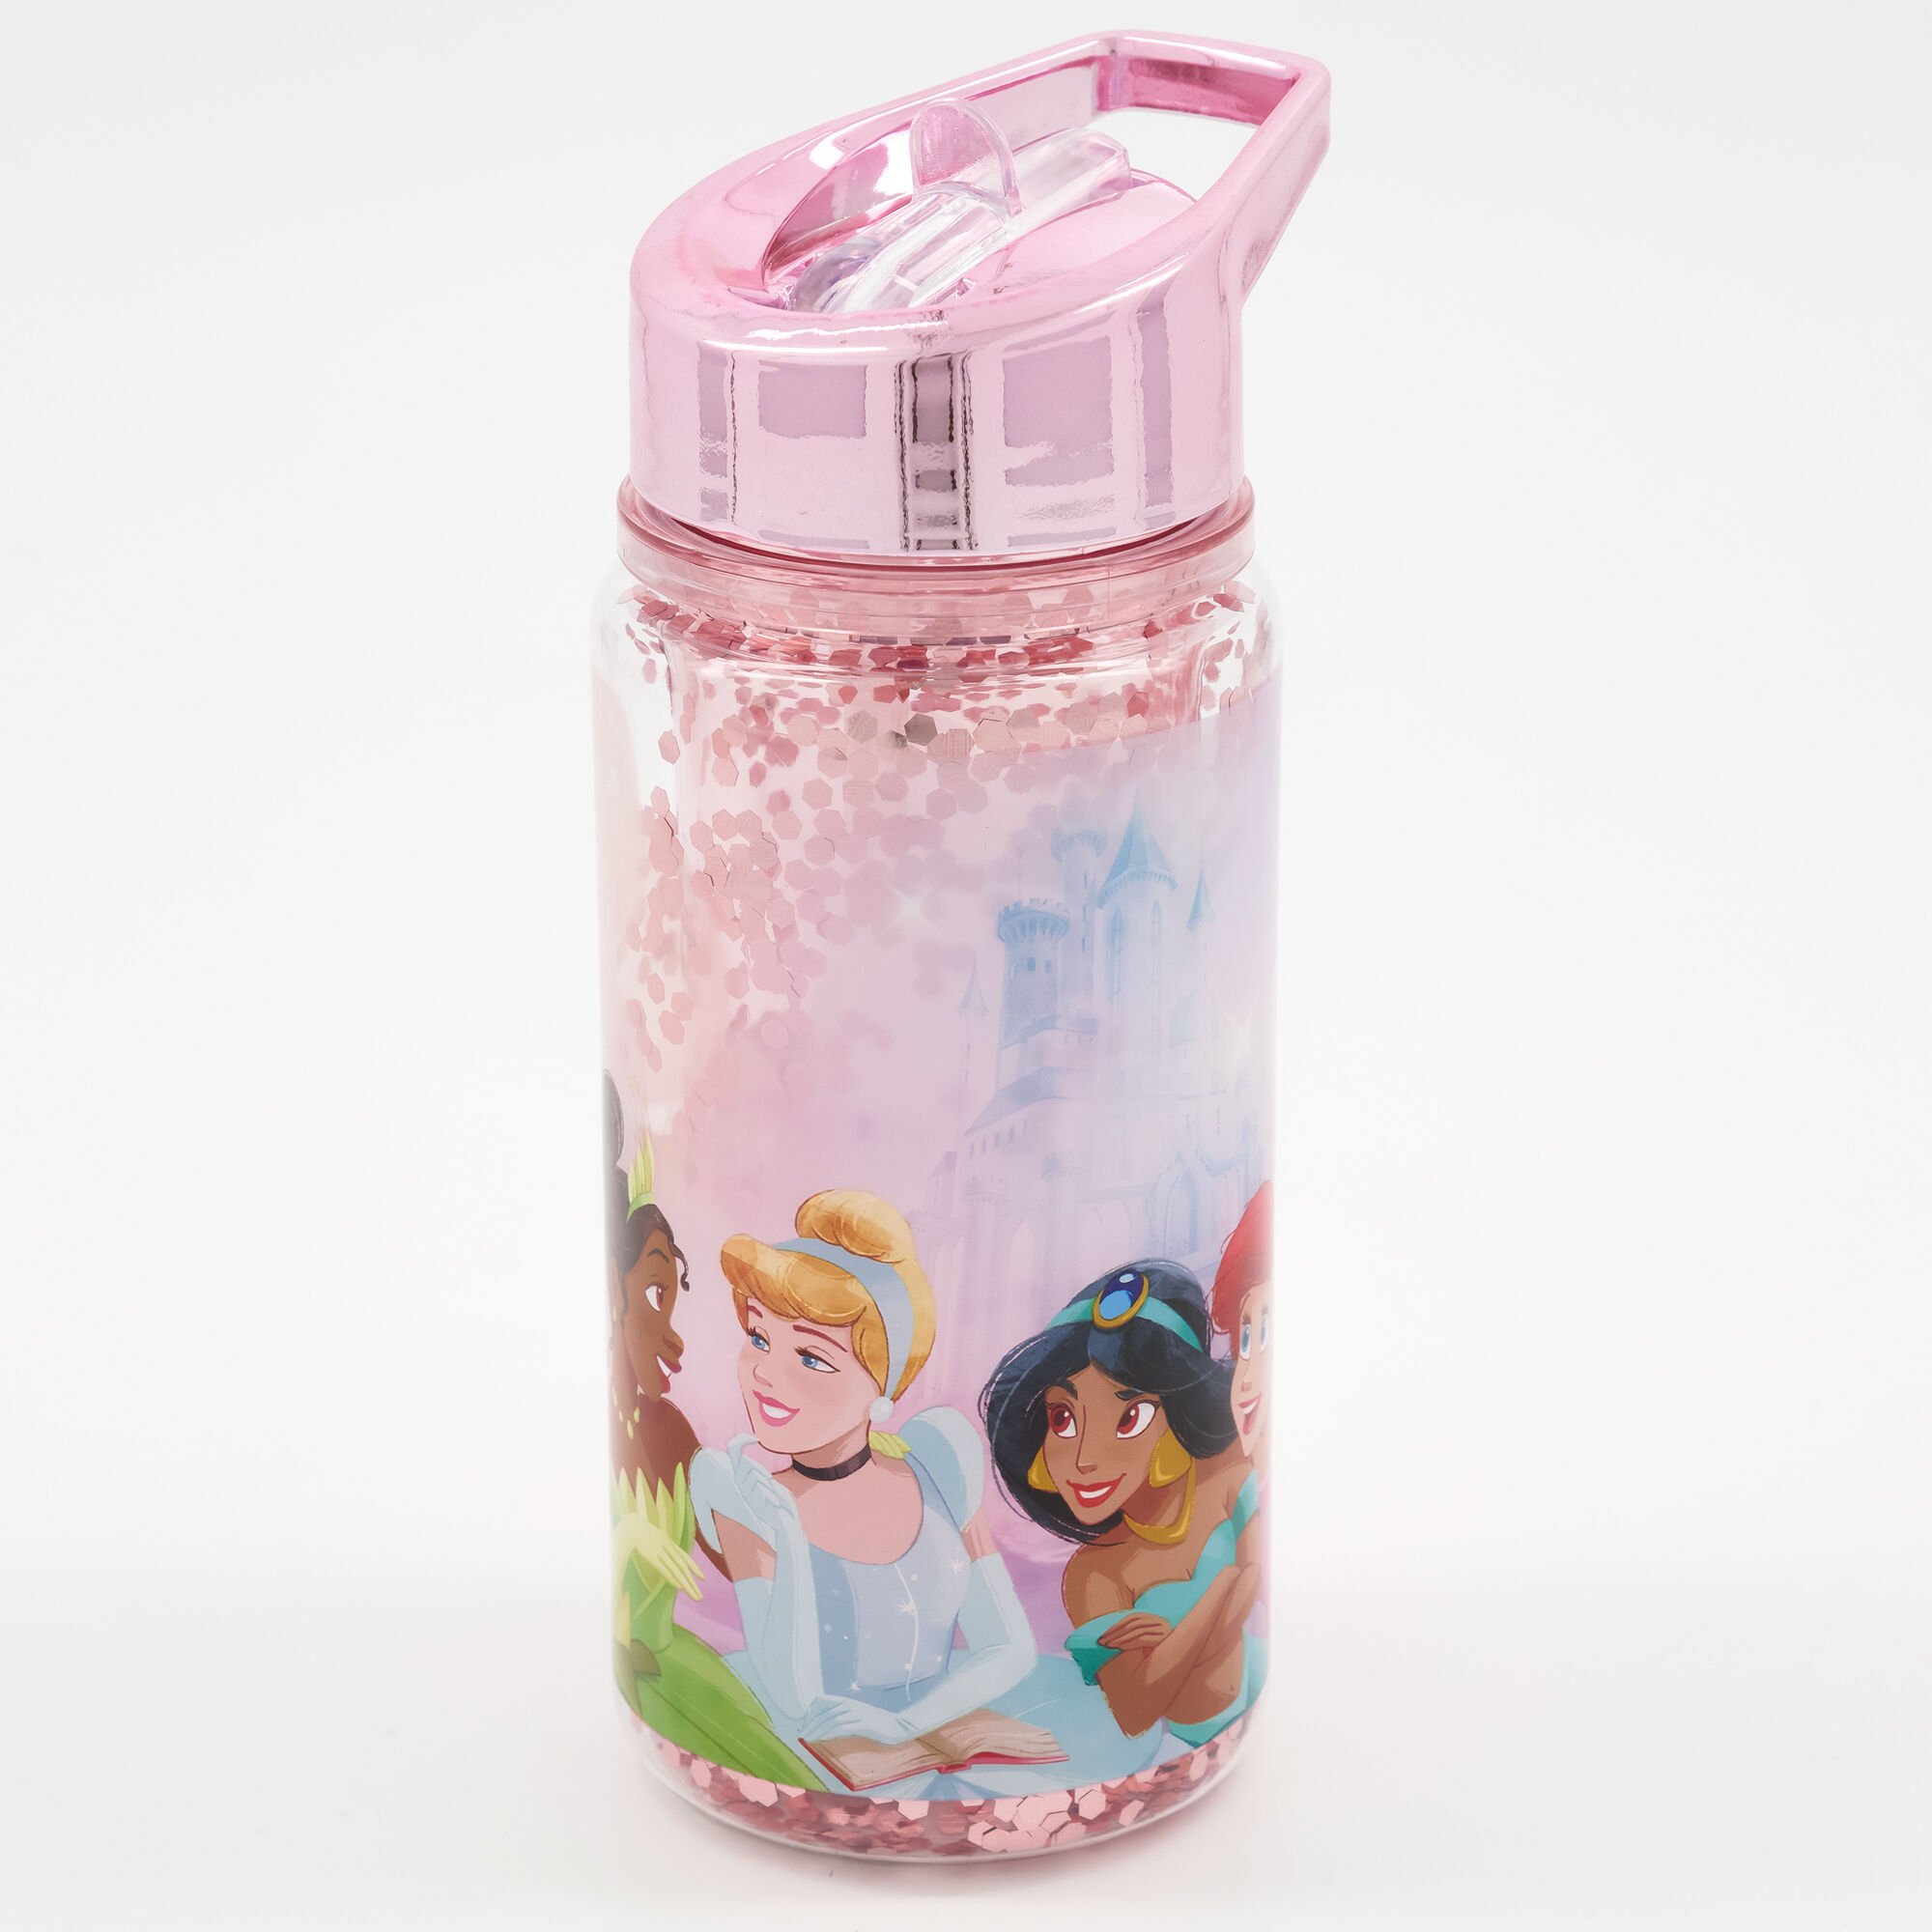 claire's ©disney princess glitter water bottle – pink